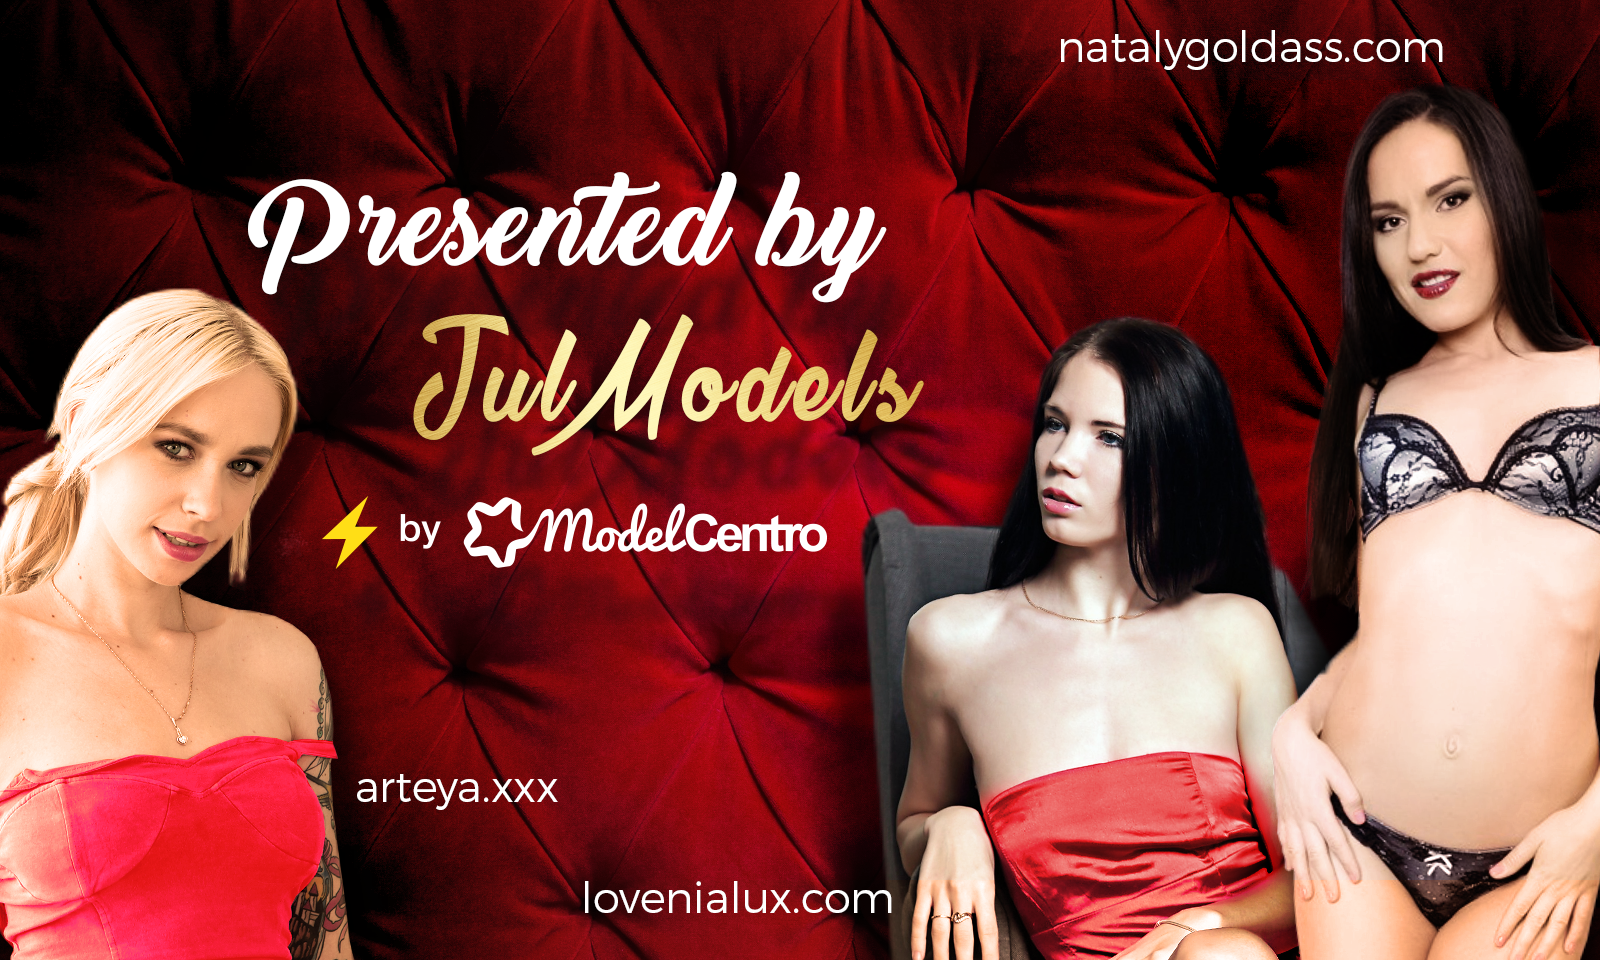 New JulModels Girls Now on ModelCentro Sites